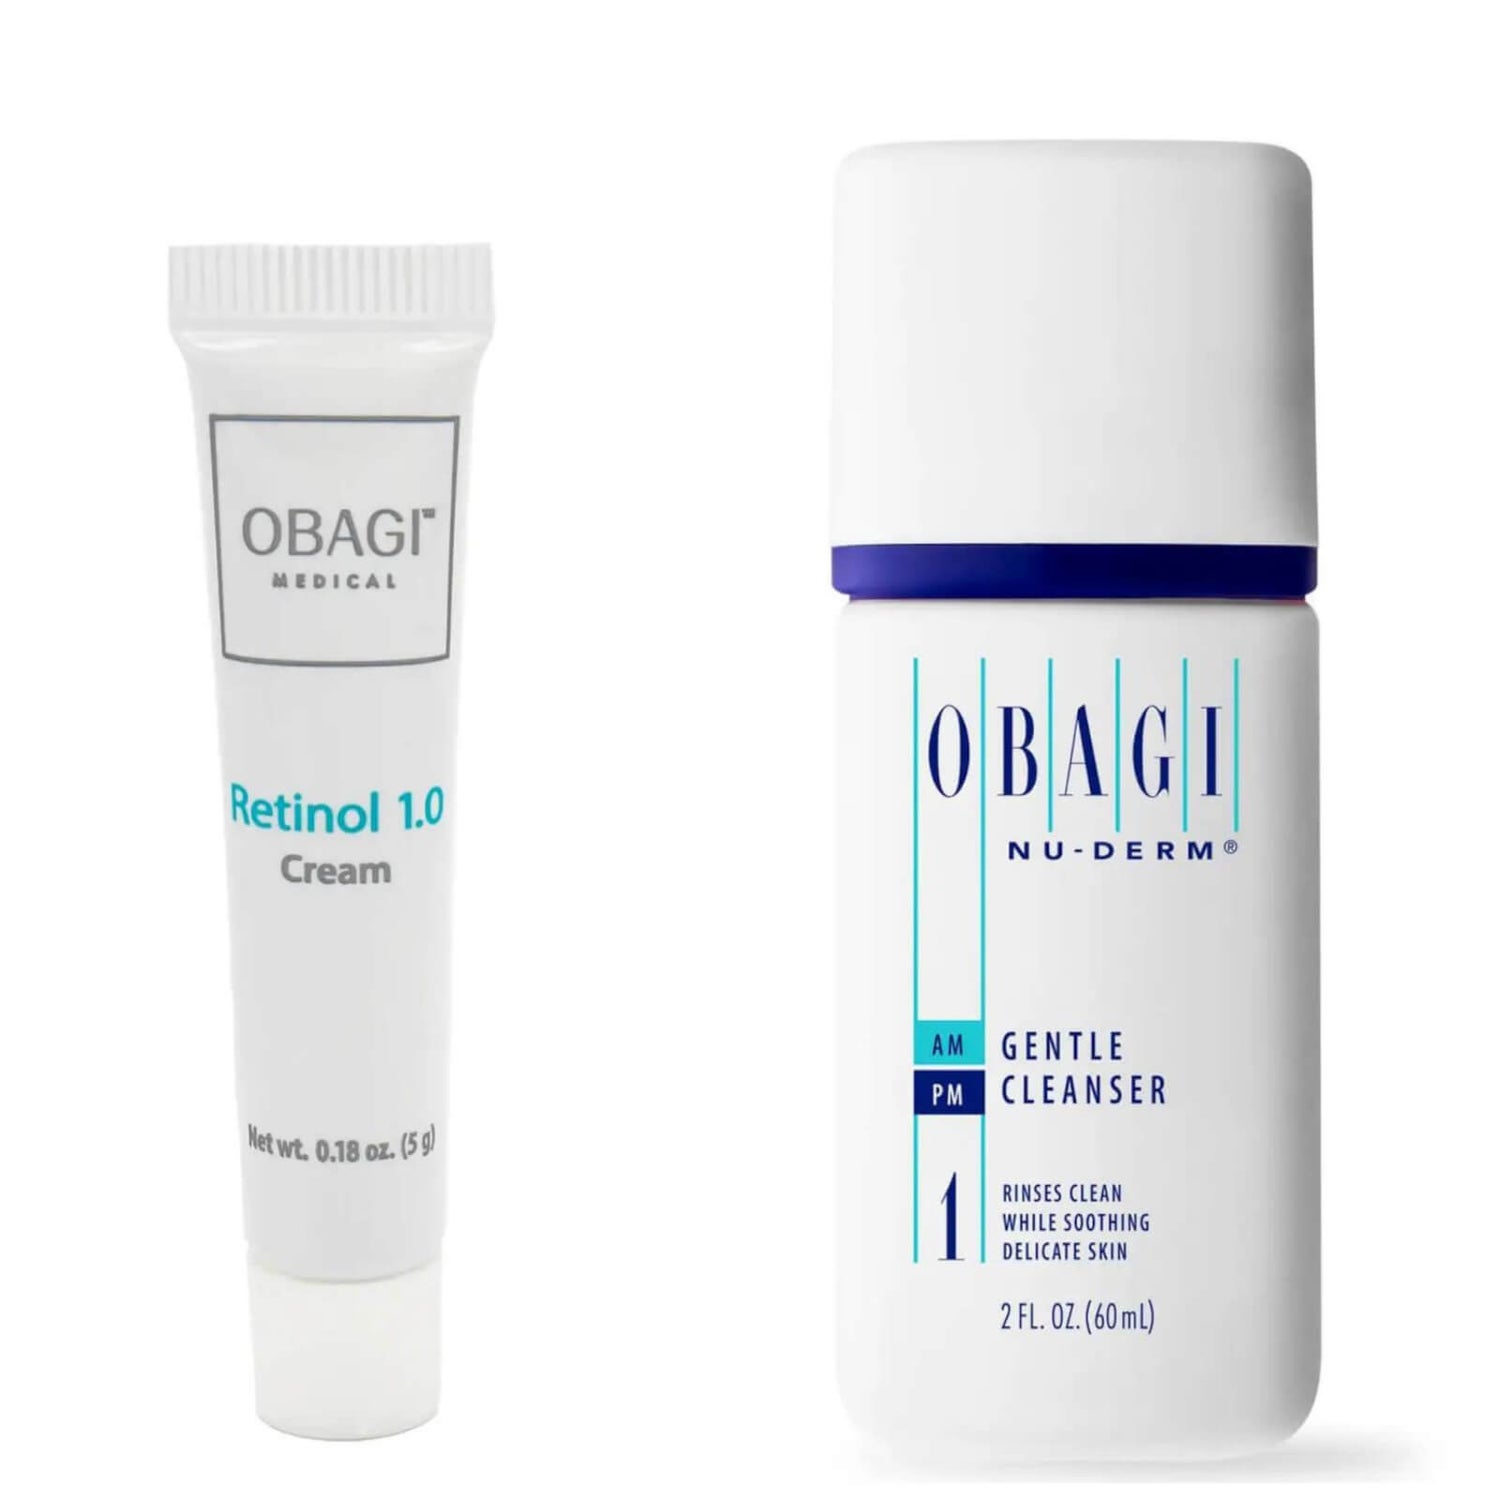 Obagi Nu-Derm Cleanser and Retinol 1.0 Duo (Worth $26)